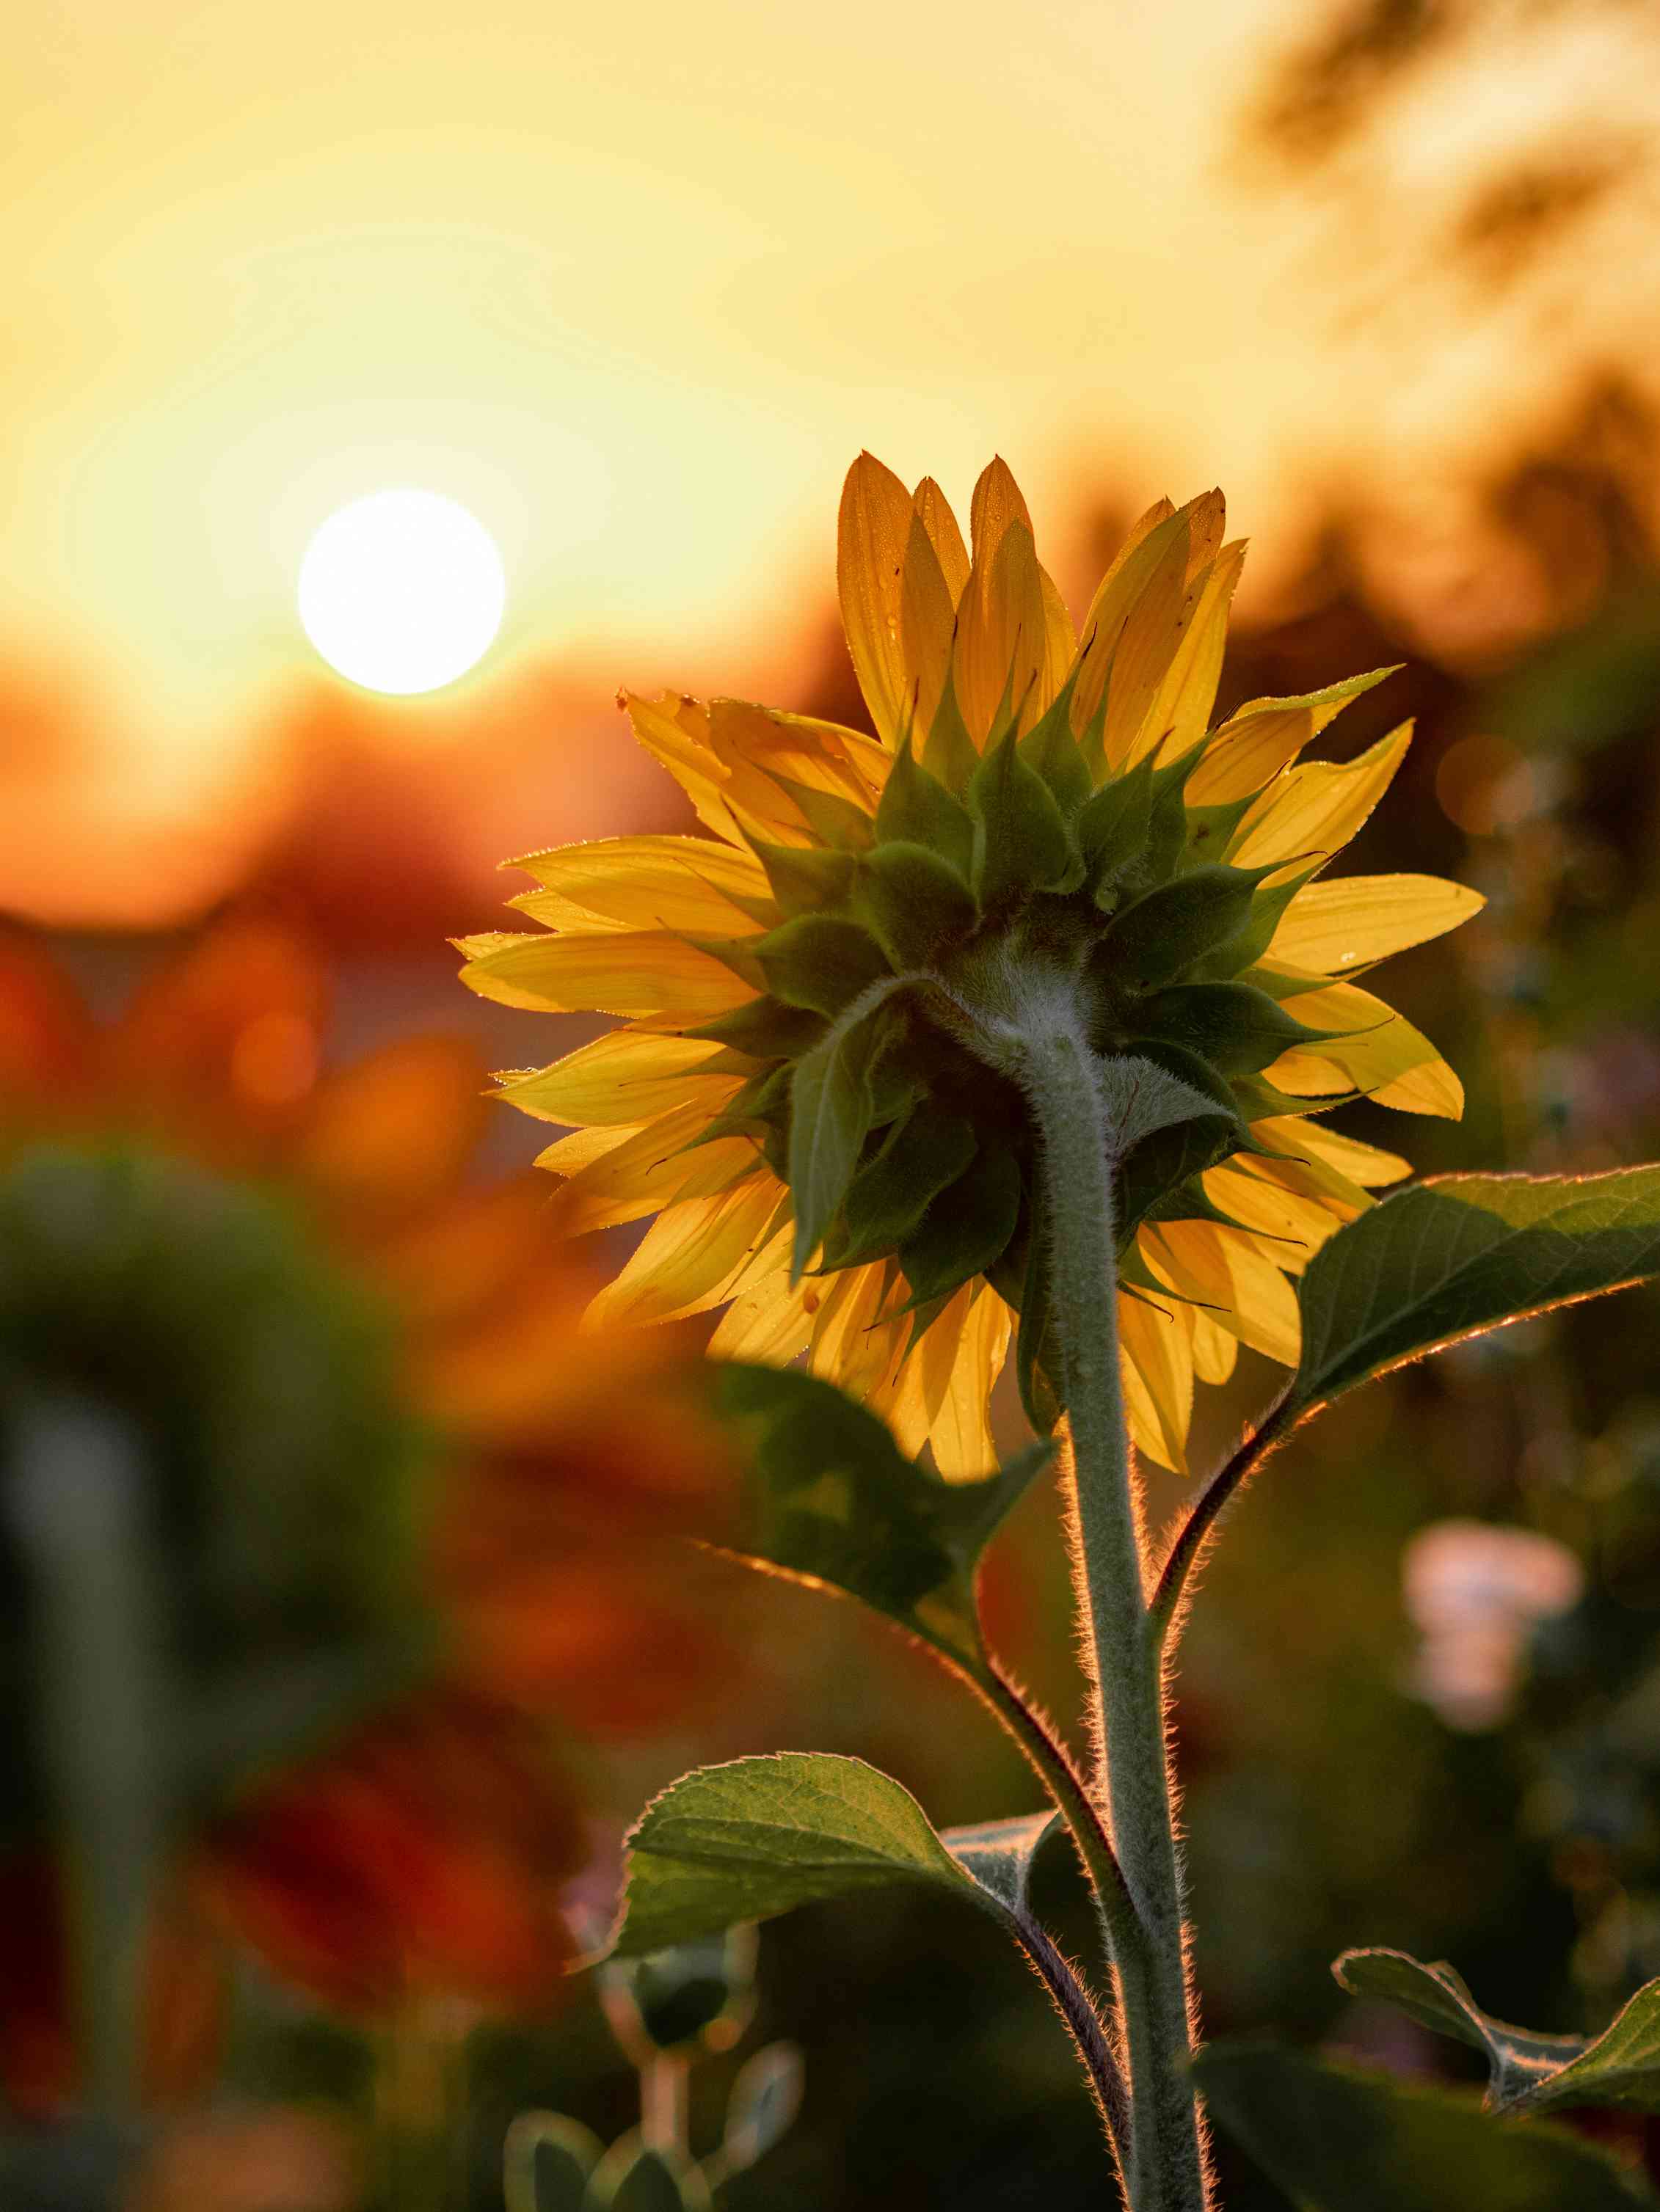 A sunflower facing a setting sun